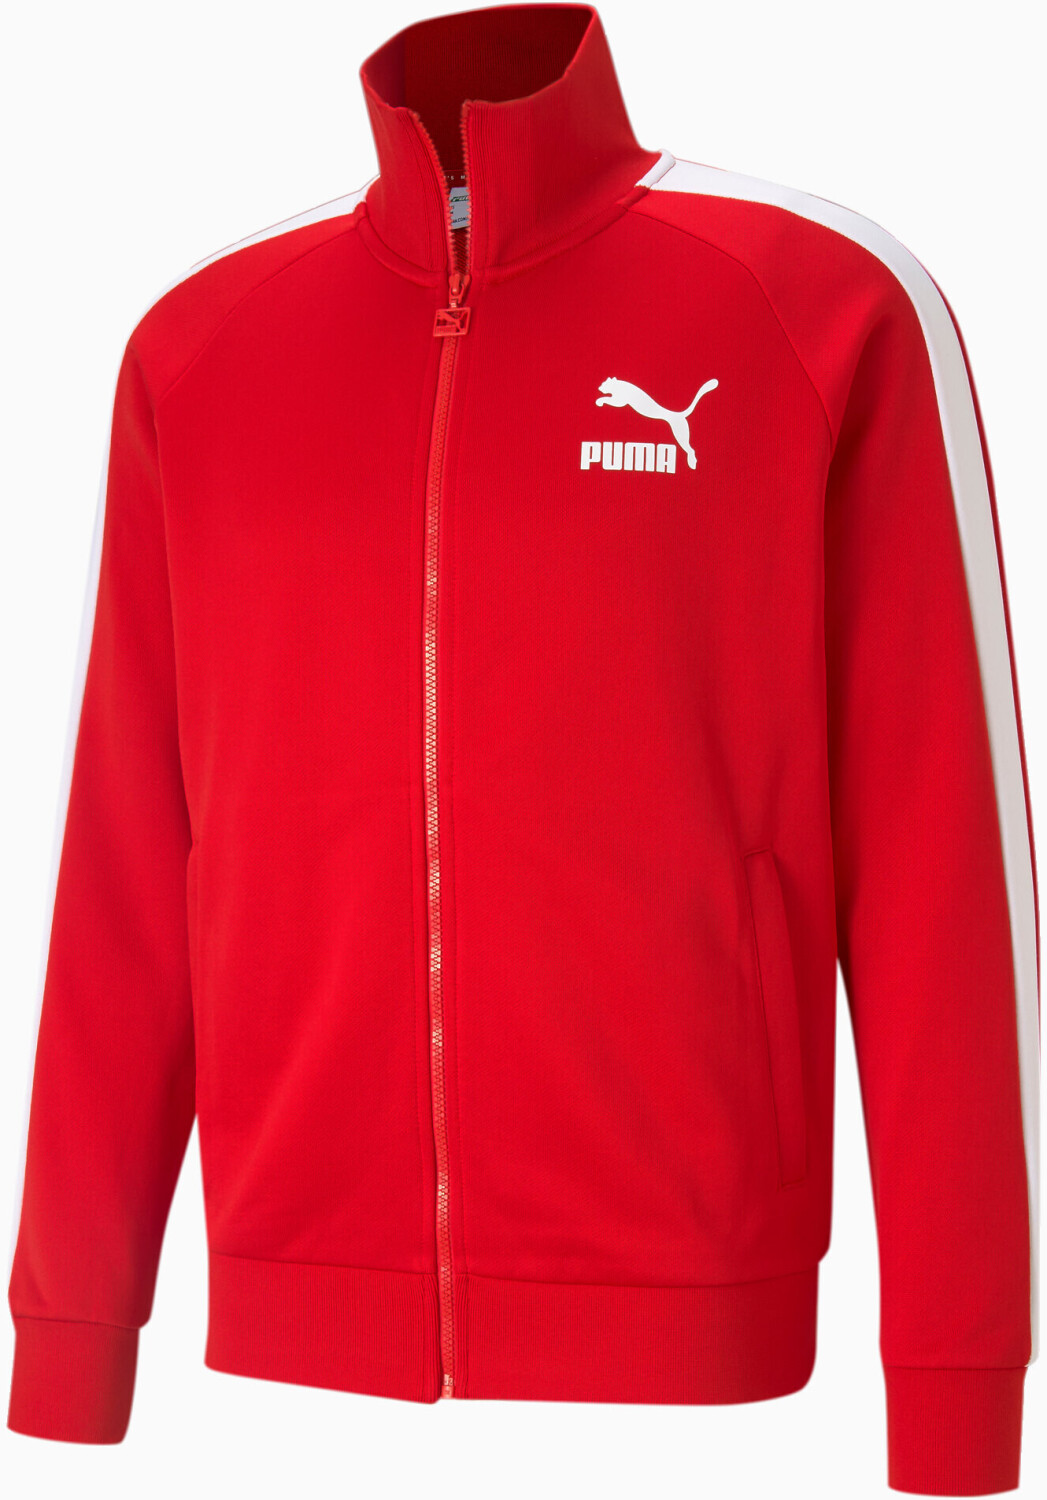 Puma Iconic T7 Men\'s Track Jacket (530094) high risk red ab 45,95 € |  Preisvergleich bei